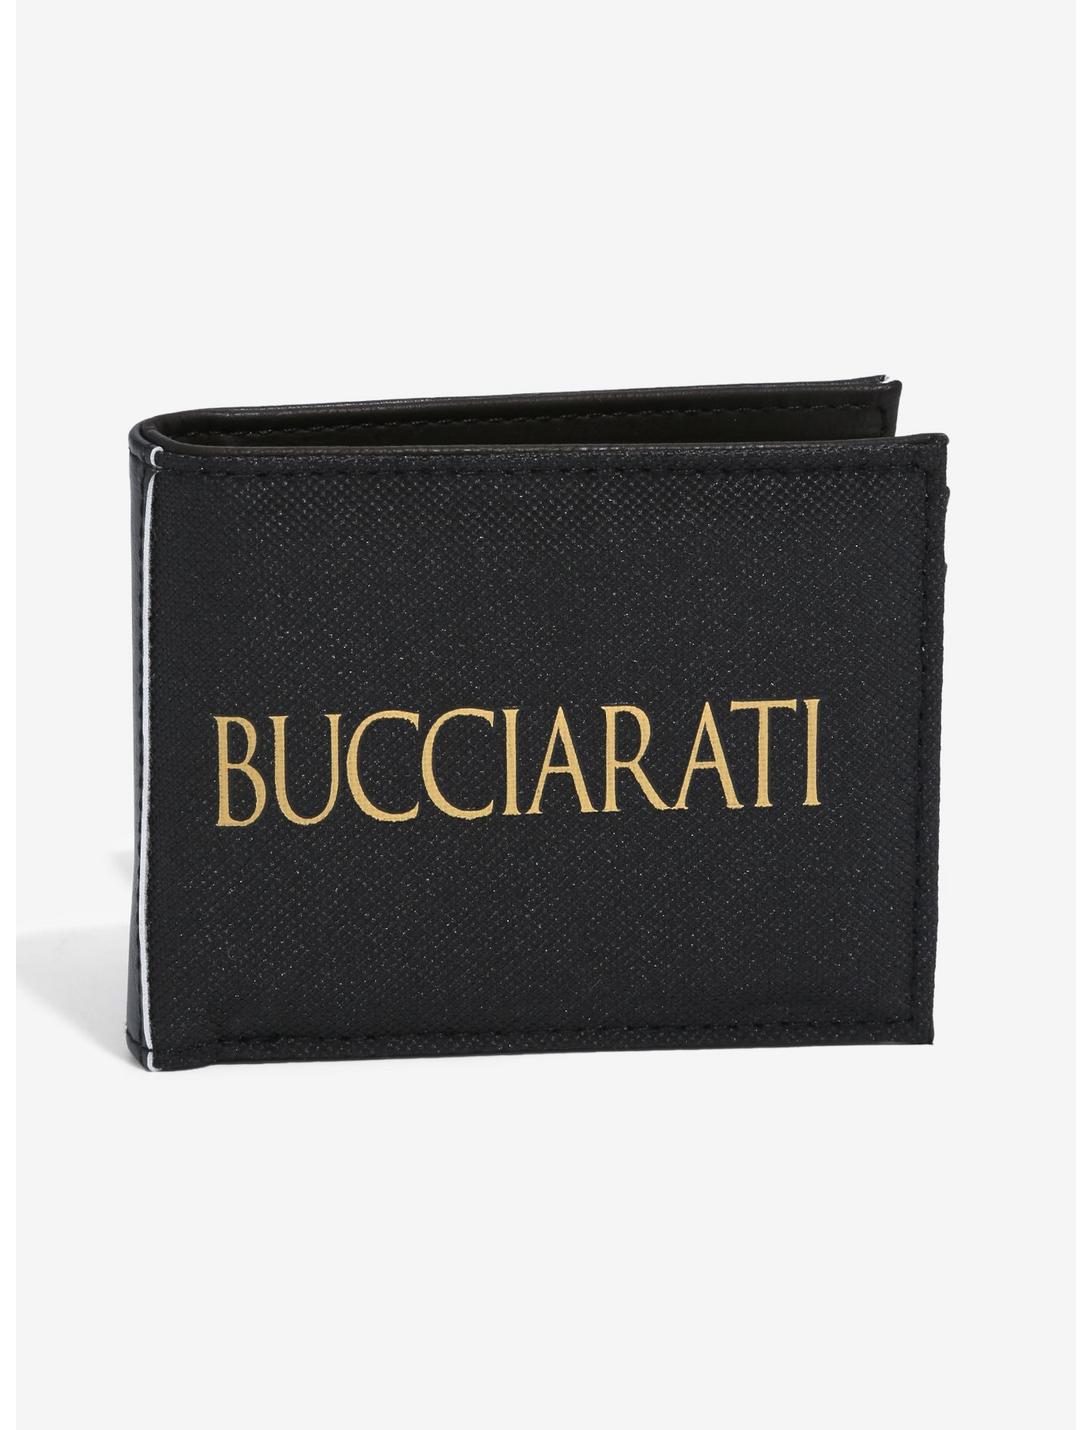 JoJo's Bizarre Adventure Bruno Bucciarati Bifold Wallet - BoxLunch Exclusive, , hi-res